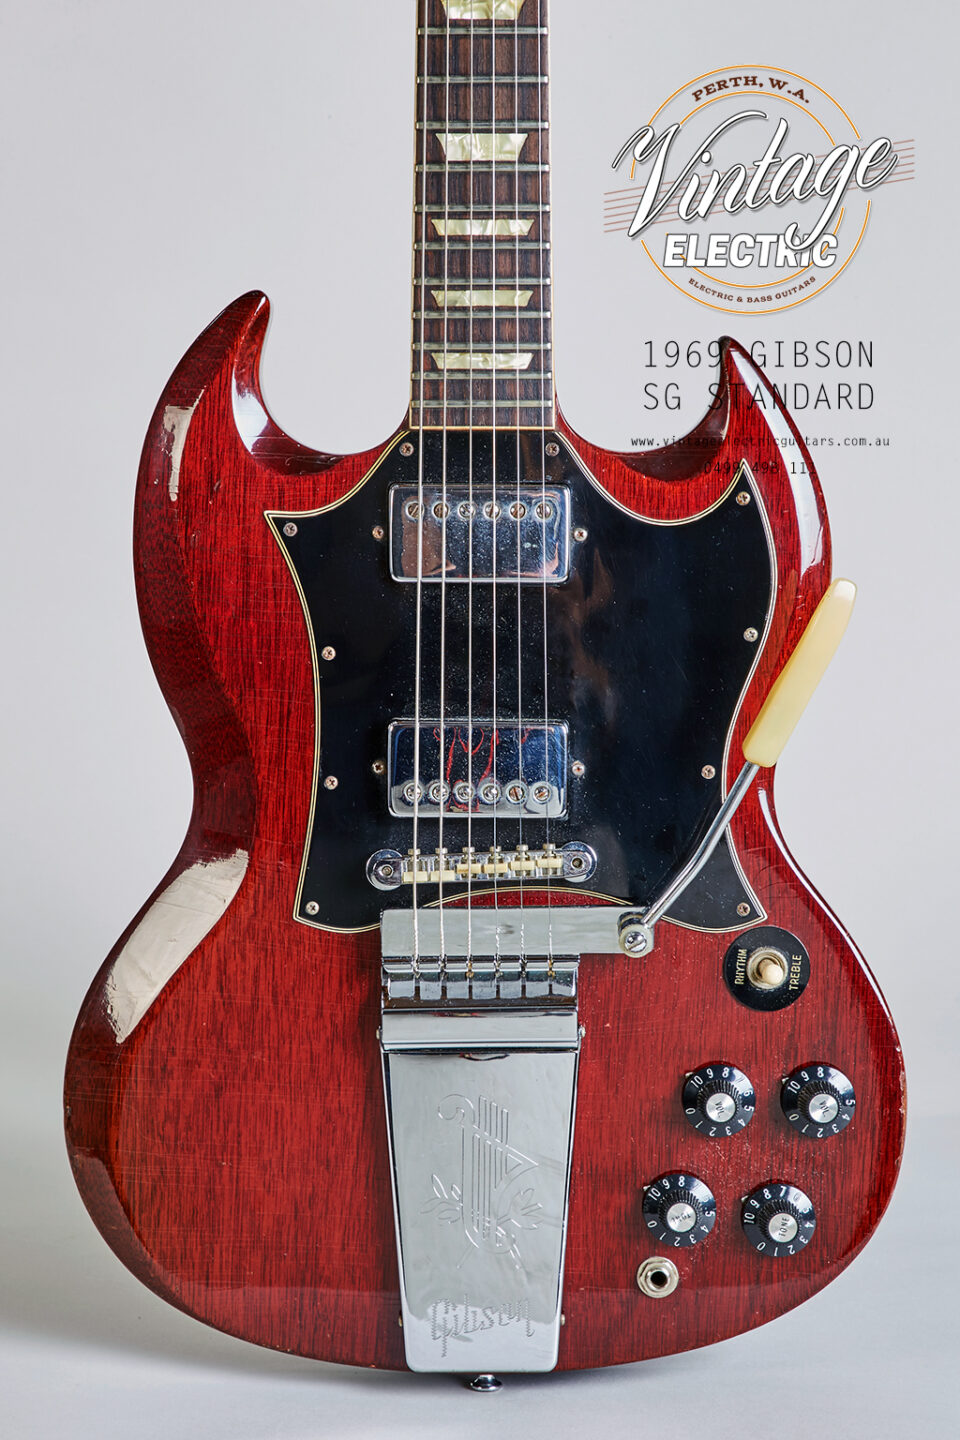 1969 Gibson SG Standard Body